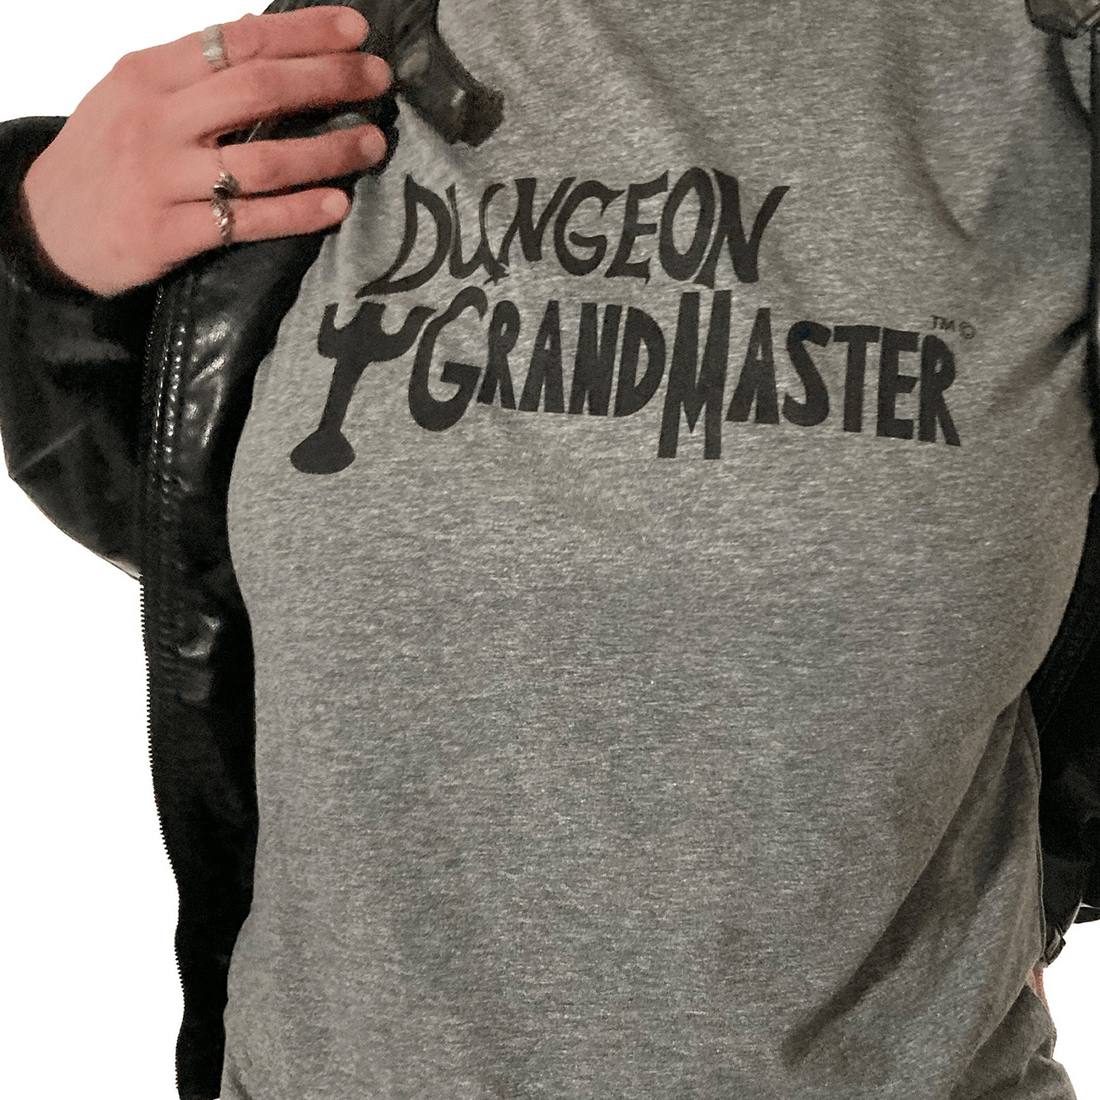 Black Logo T-Shirt | Tshirts For Teens | Products Dungeon GrandMaster